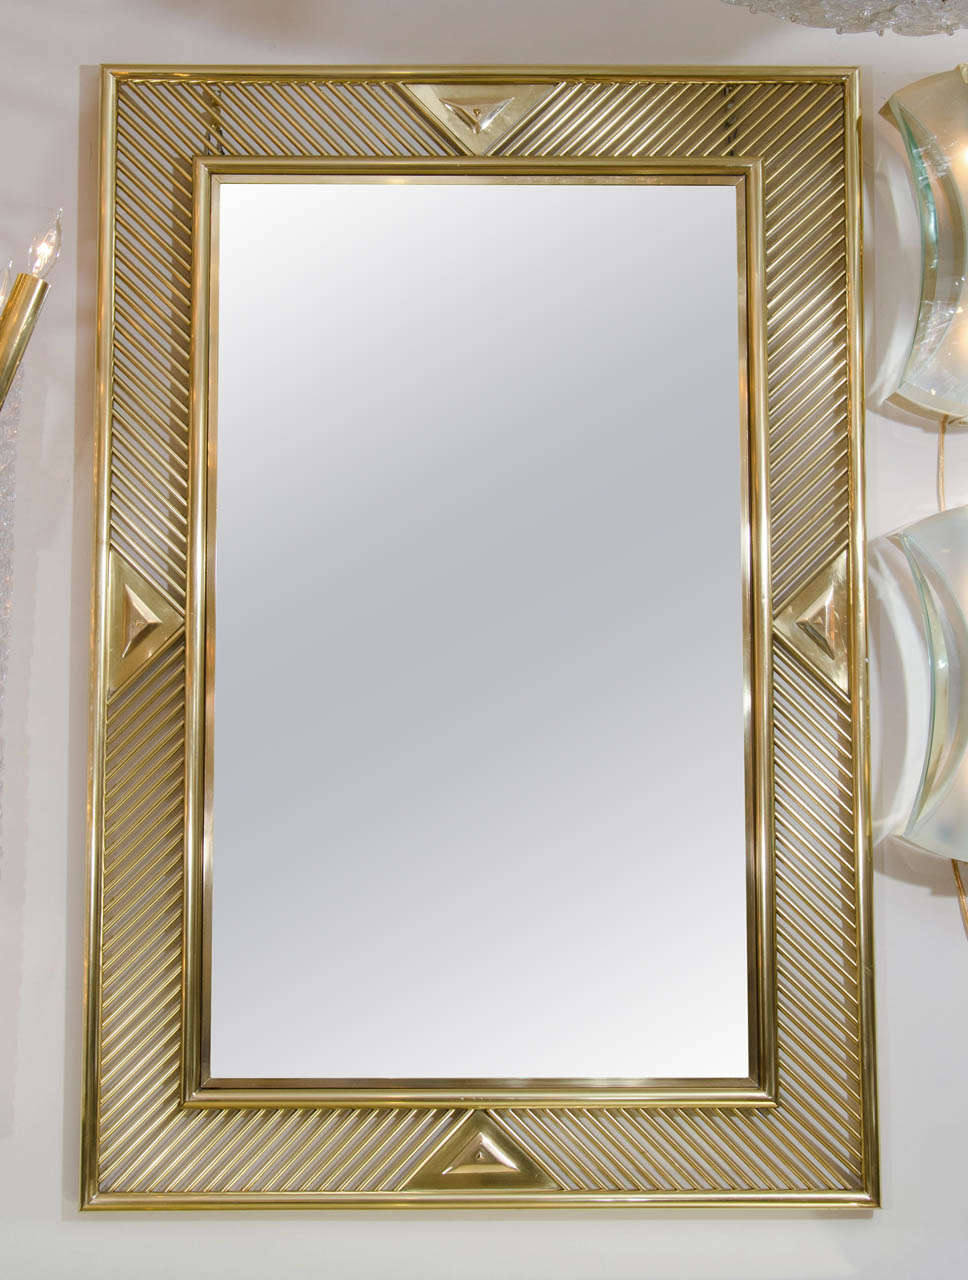 Rectangular brass mirror with openwork geometric surround.